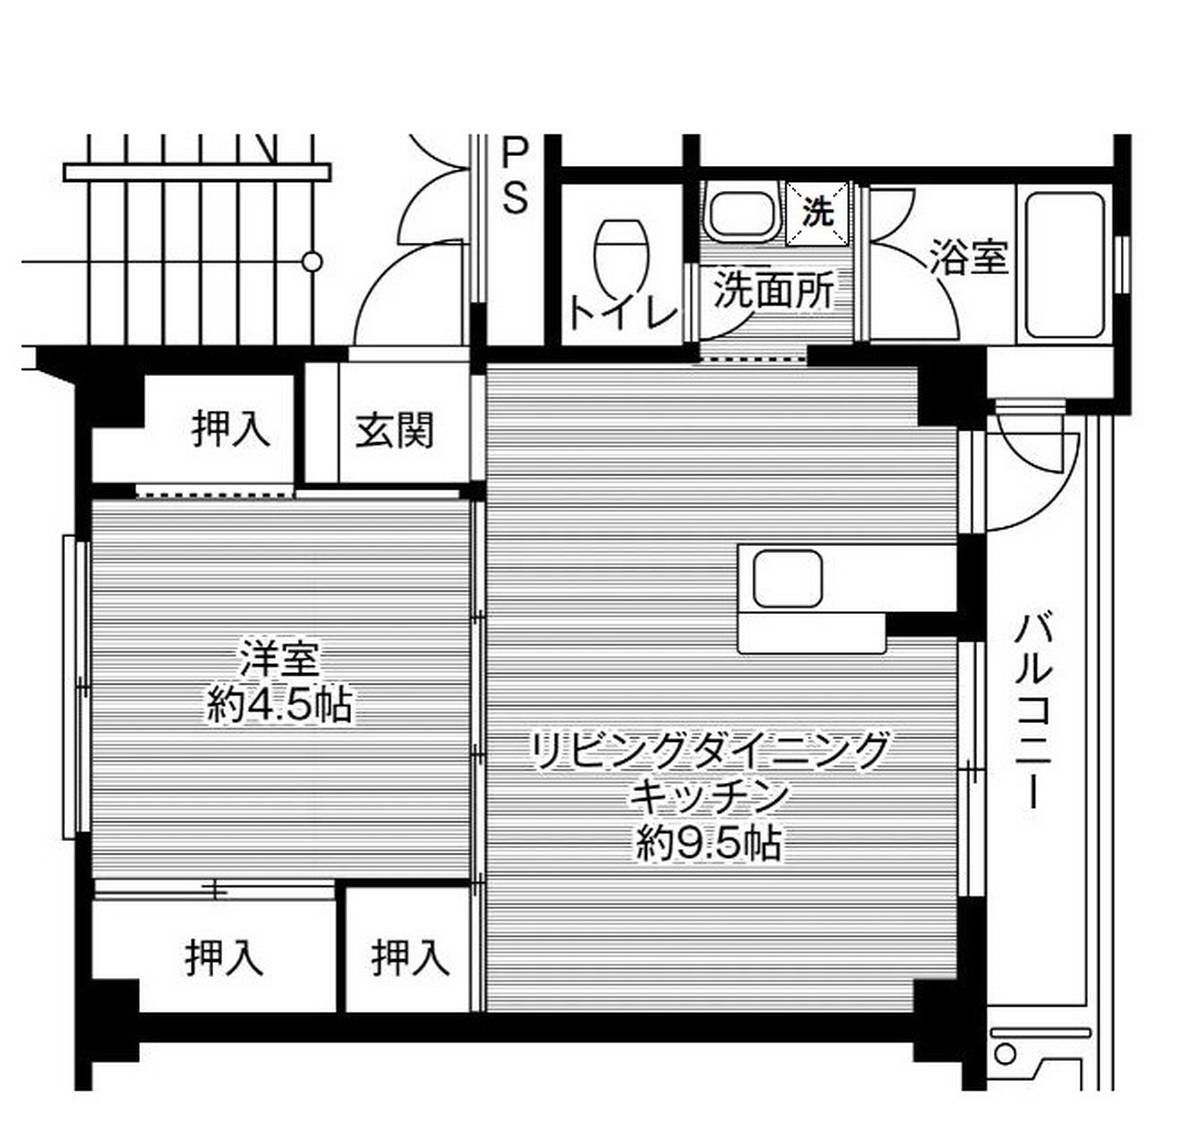 1LDK floorplan of Village House Hayashi in Kurashiki-shi